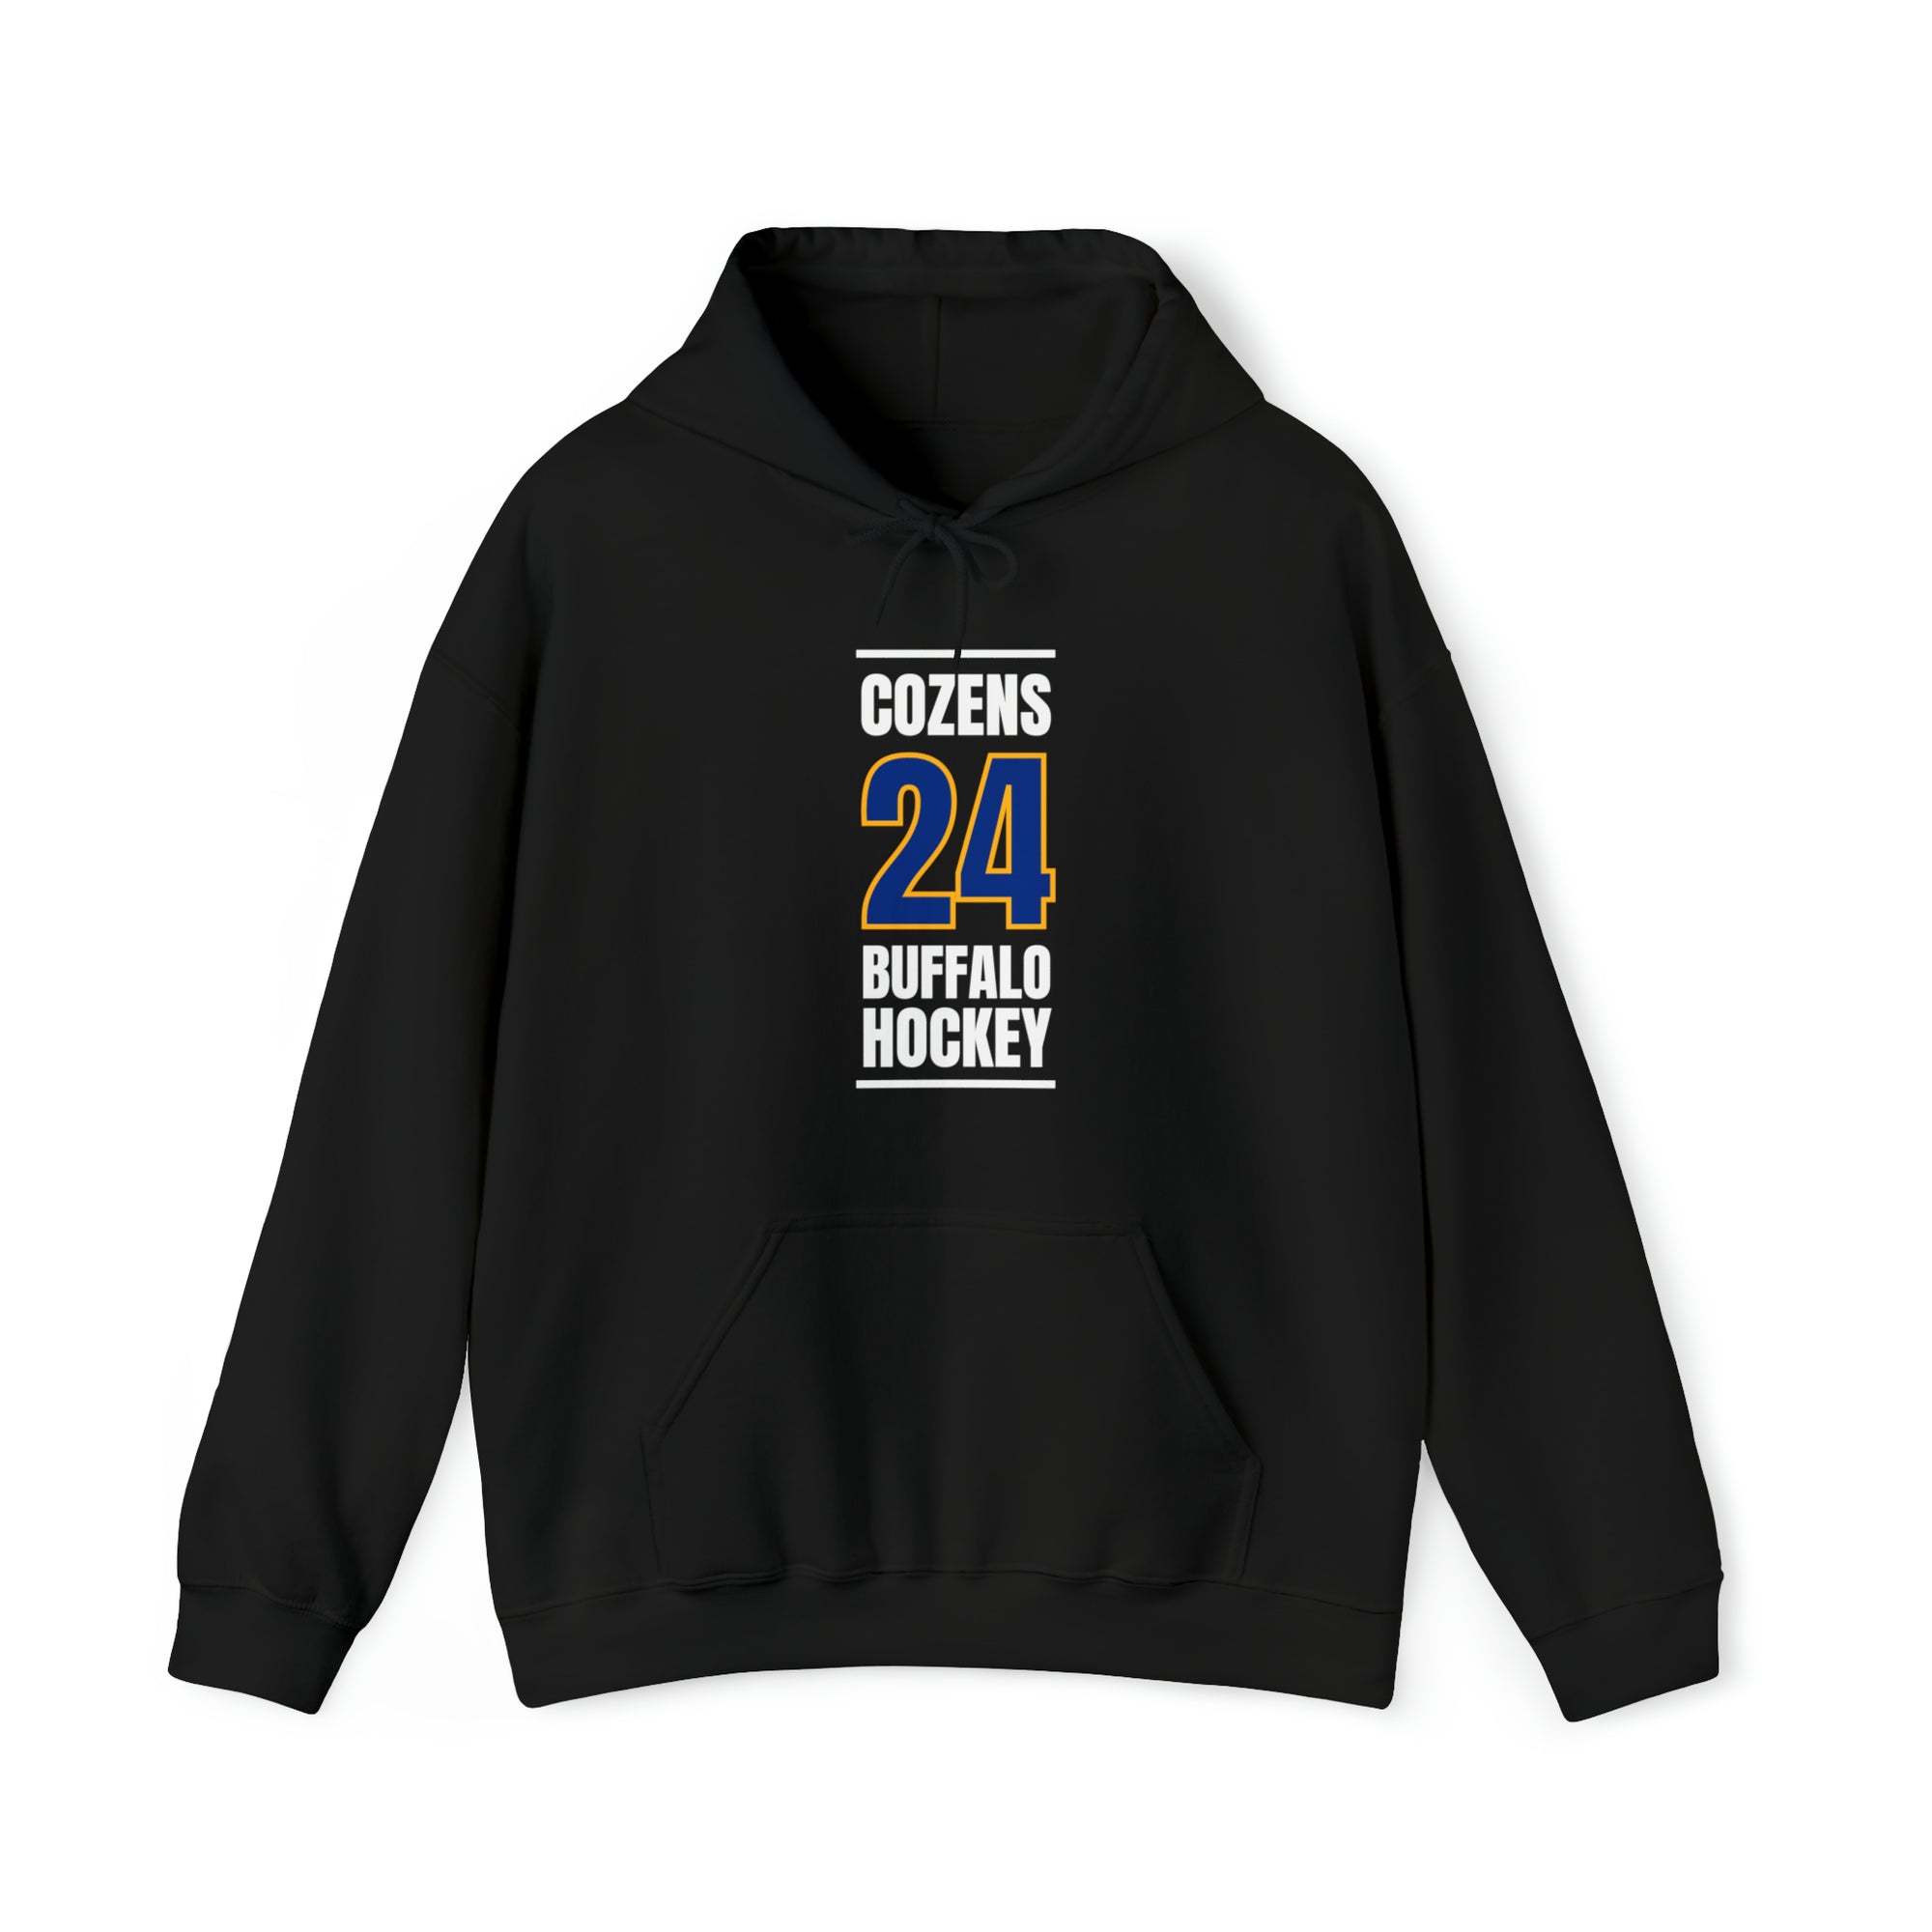 Cozens 24 Buffalo Hockey Royal Blue Vertical Design Unisex Hooded Sweatshirt